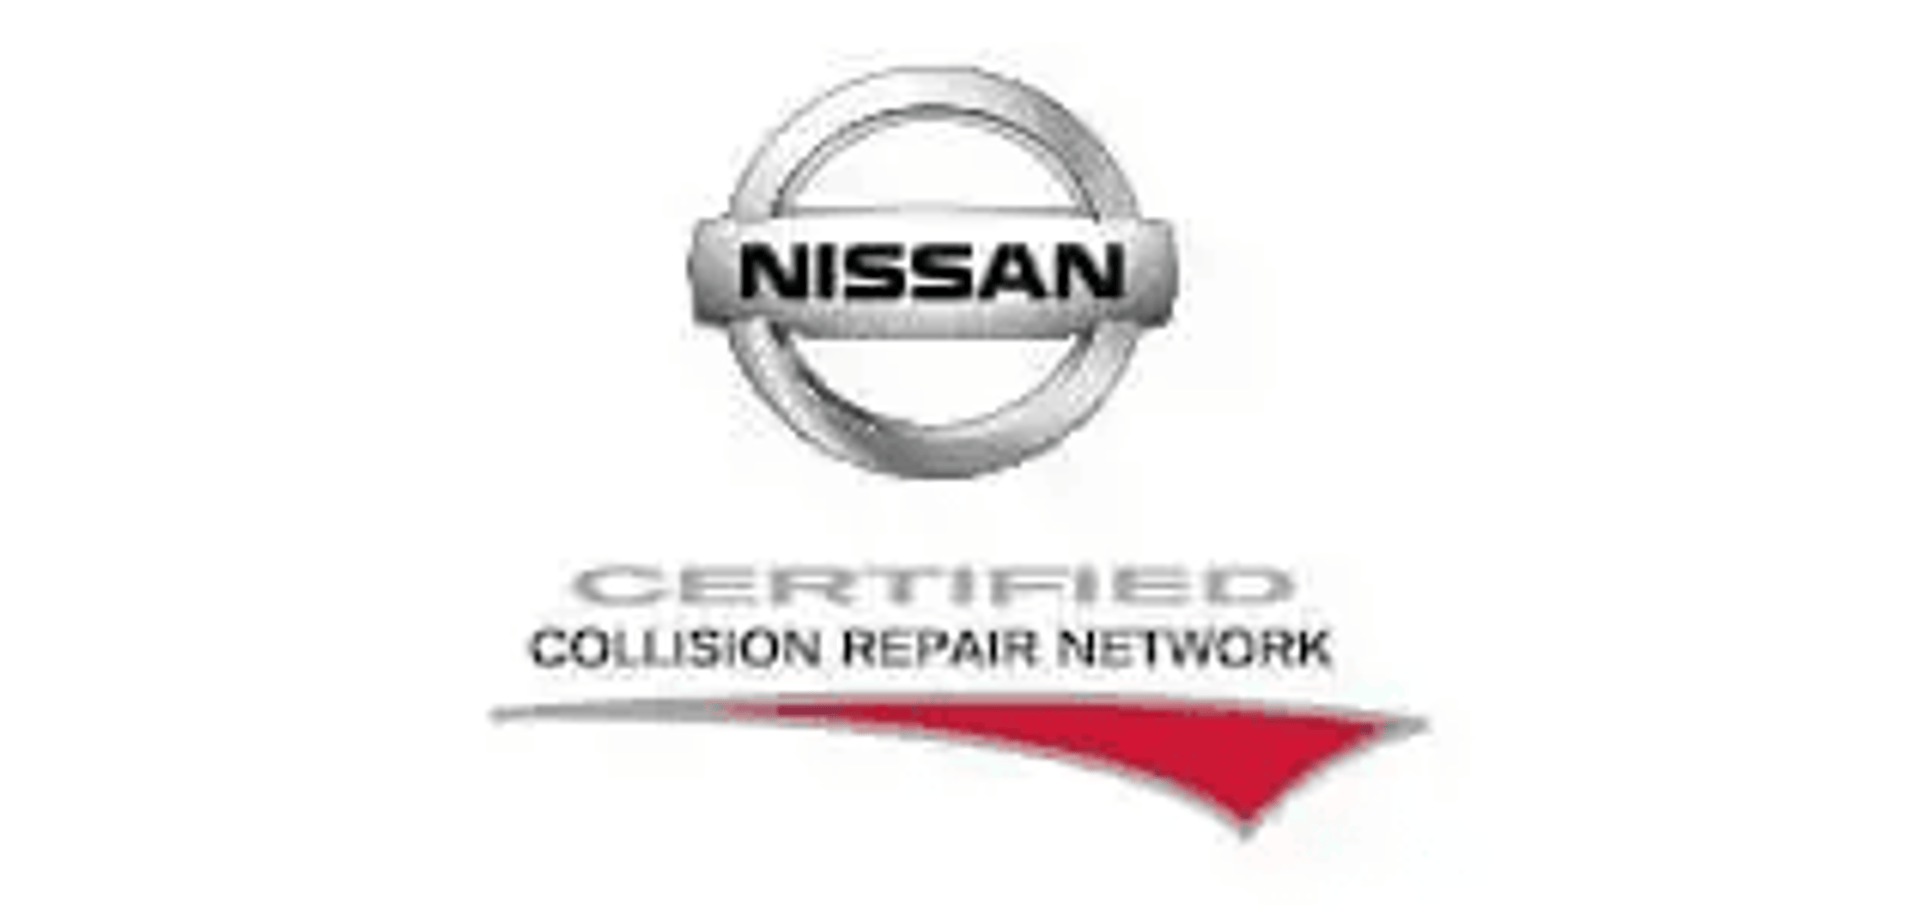 nissan certified collision repair